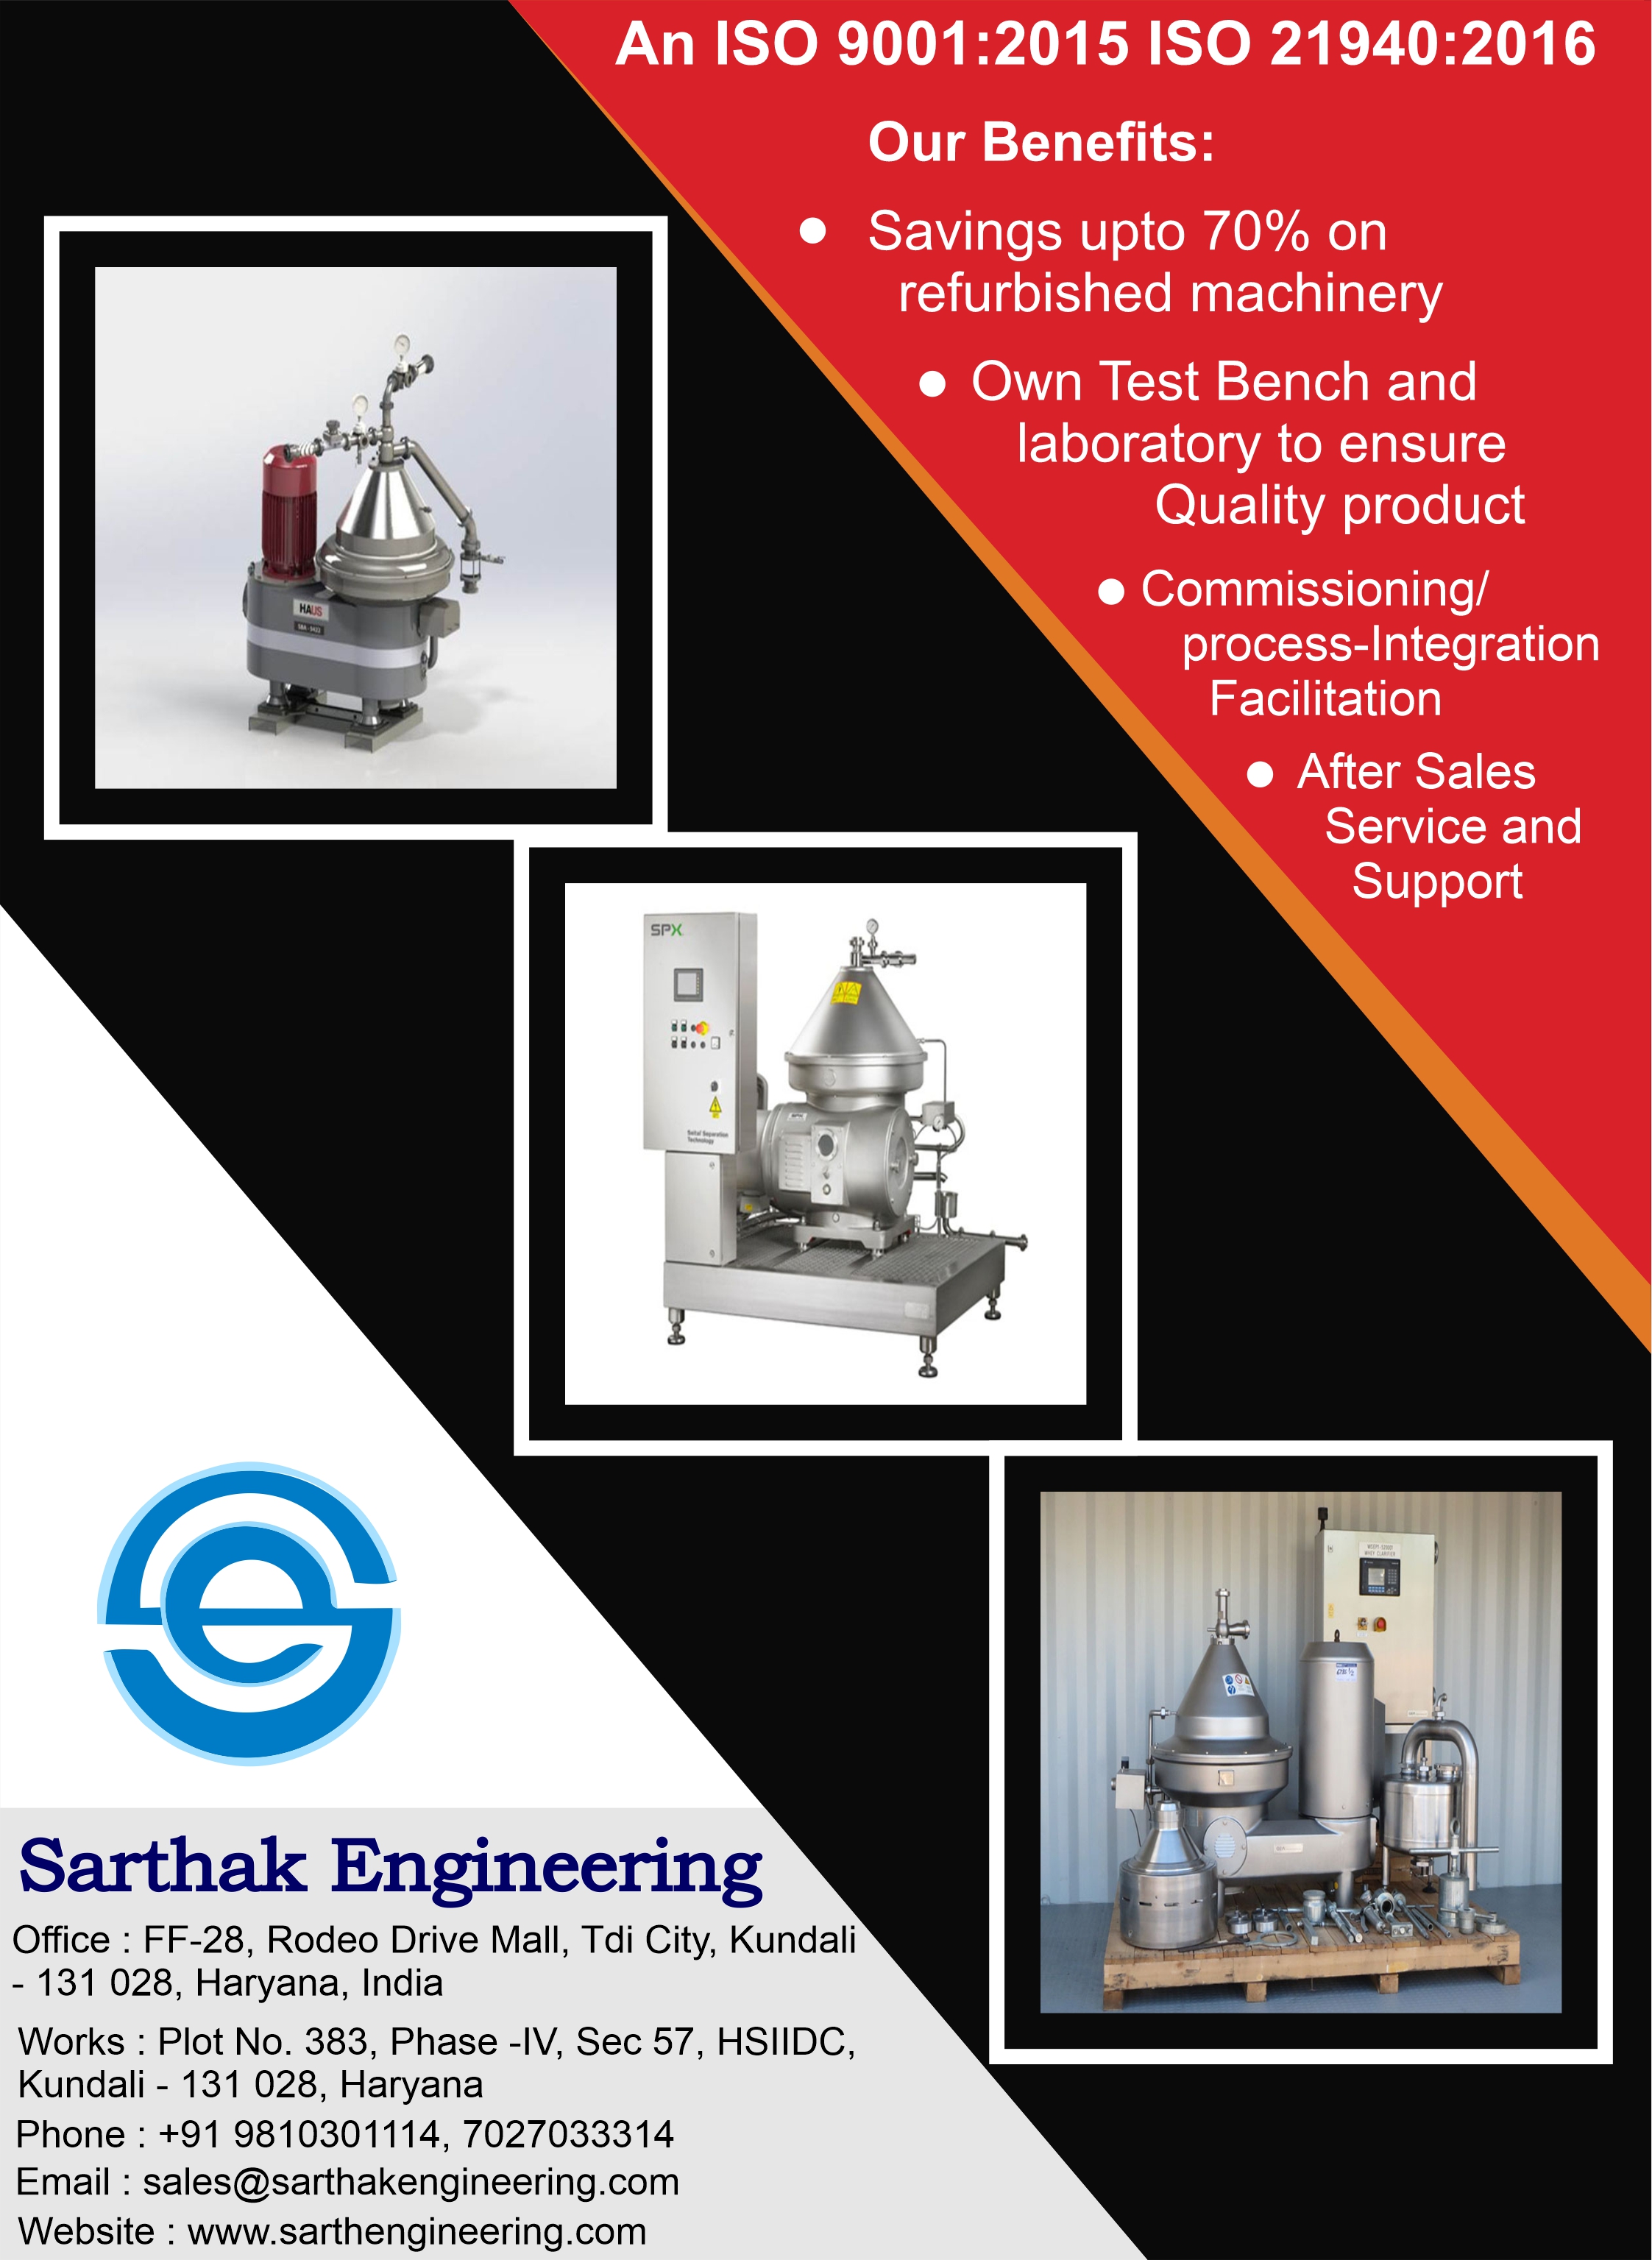 Sarthak Engineering